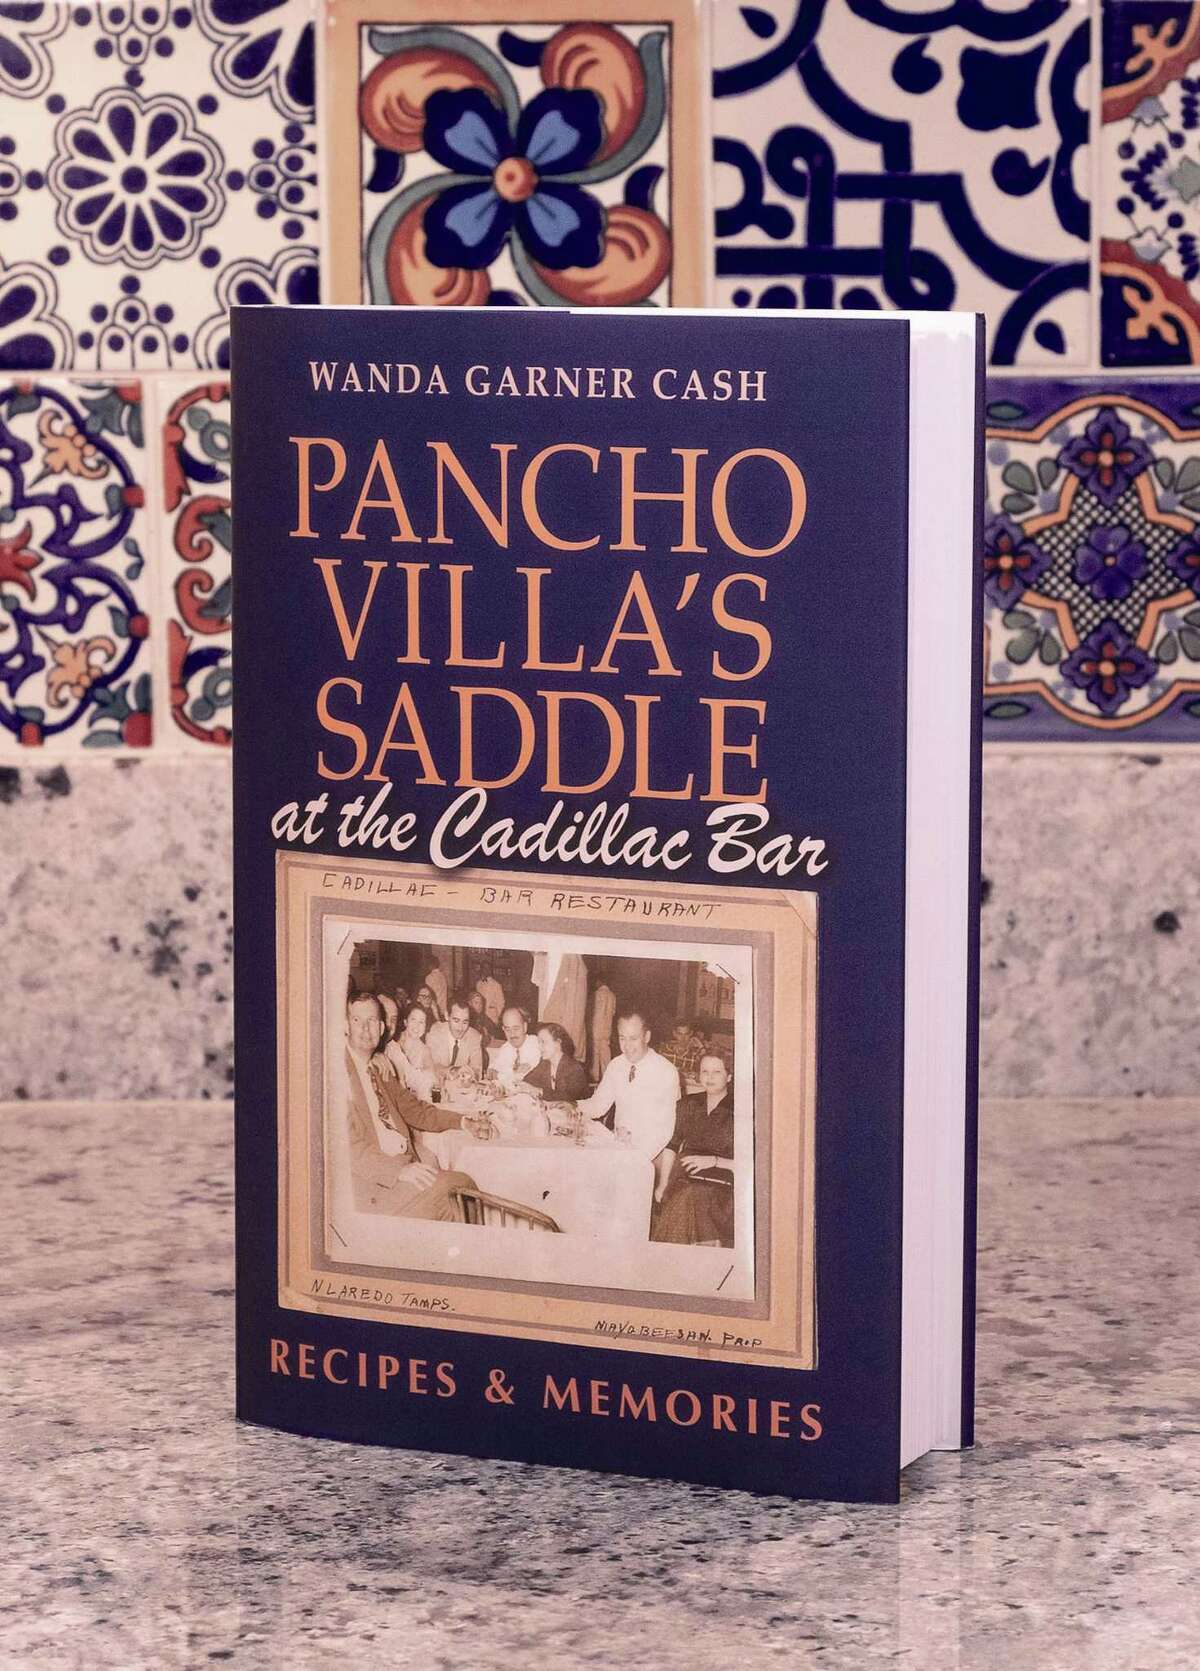 Wanda Garner Cash is holding a book signing for her book “Pancho Villa’s Saddle at the Cadillac Bar.”